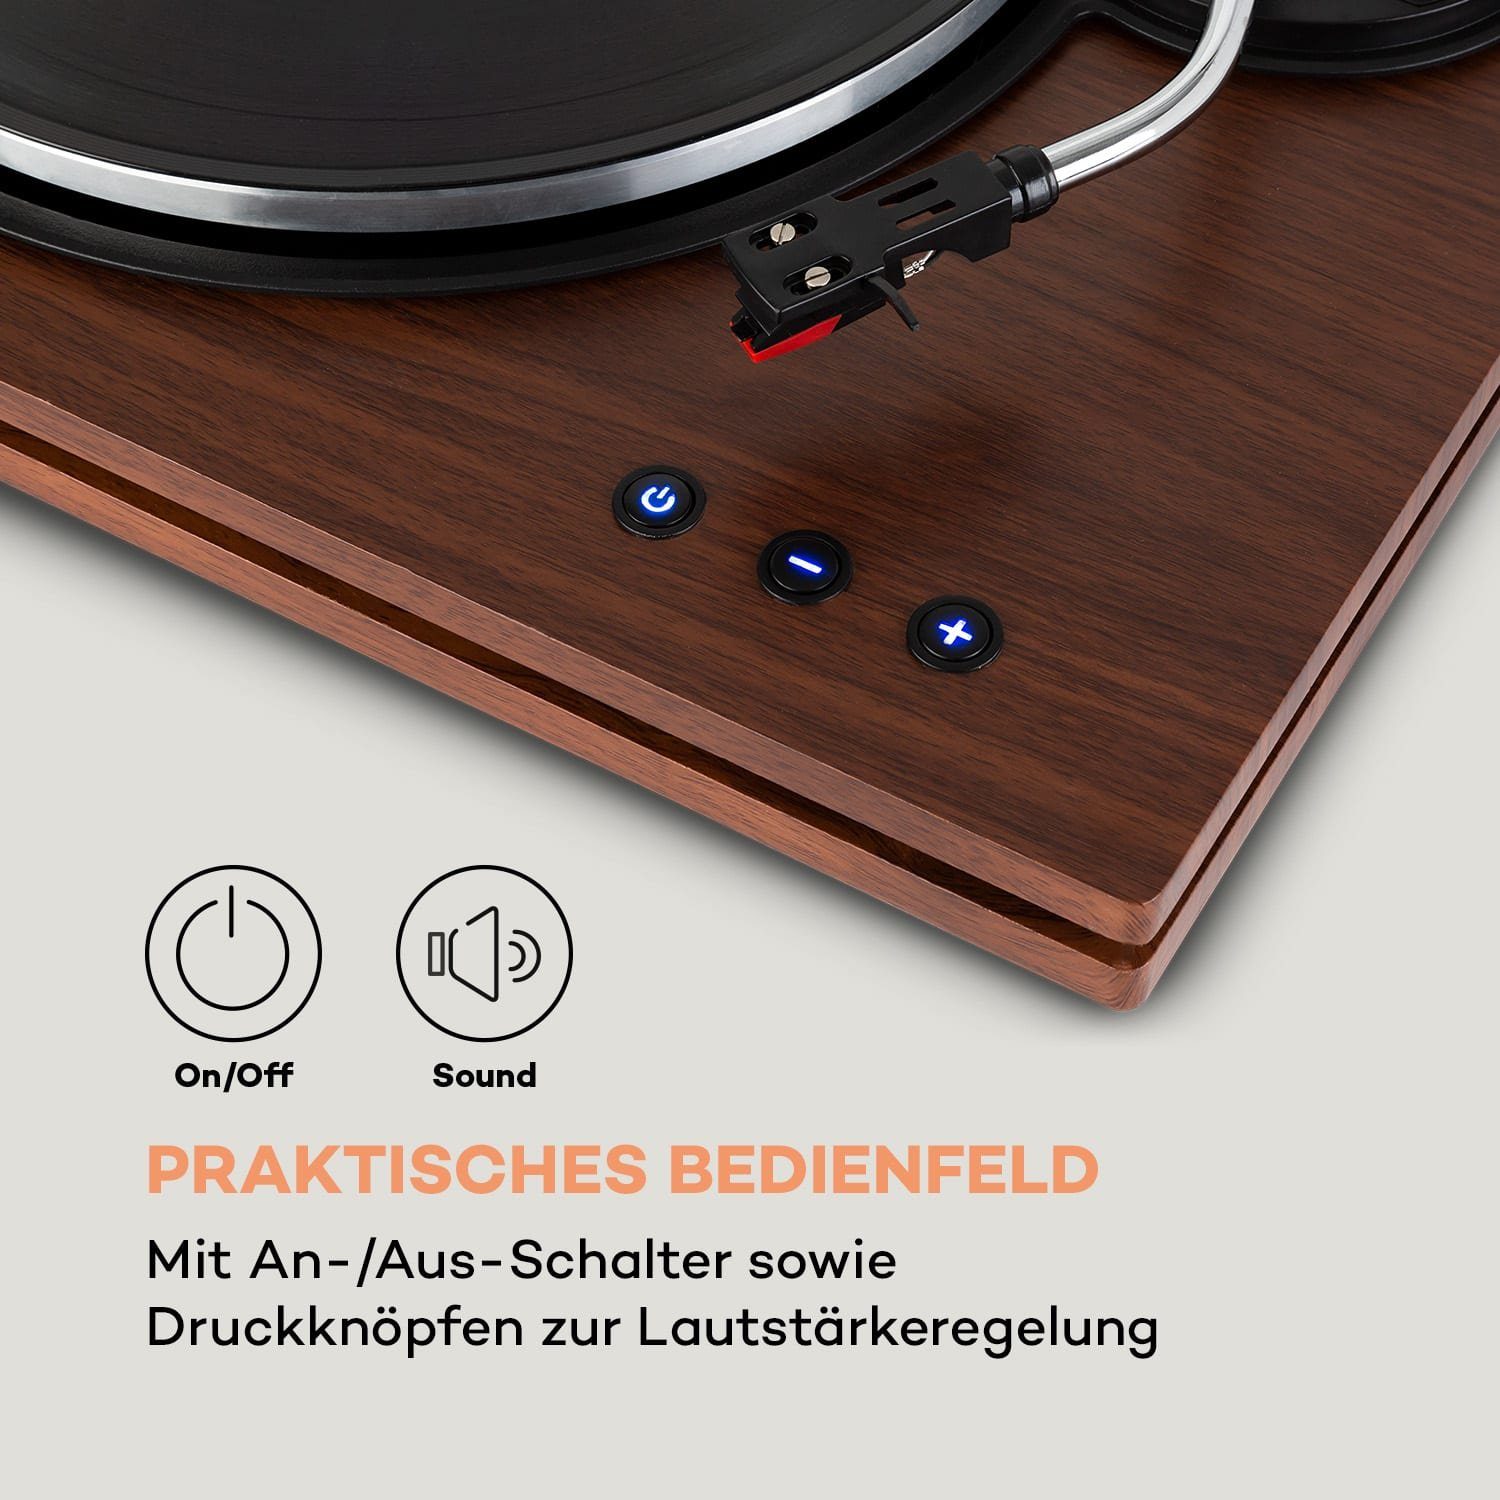 Auna TT-Play PLUS Plattenspieler mit Bluetooth, (Riemenantrieb, Plattenspieler) Schallplattenspieler Lautsprecher Vinyl